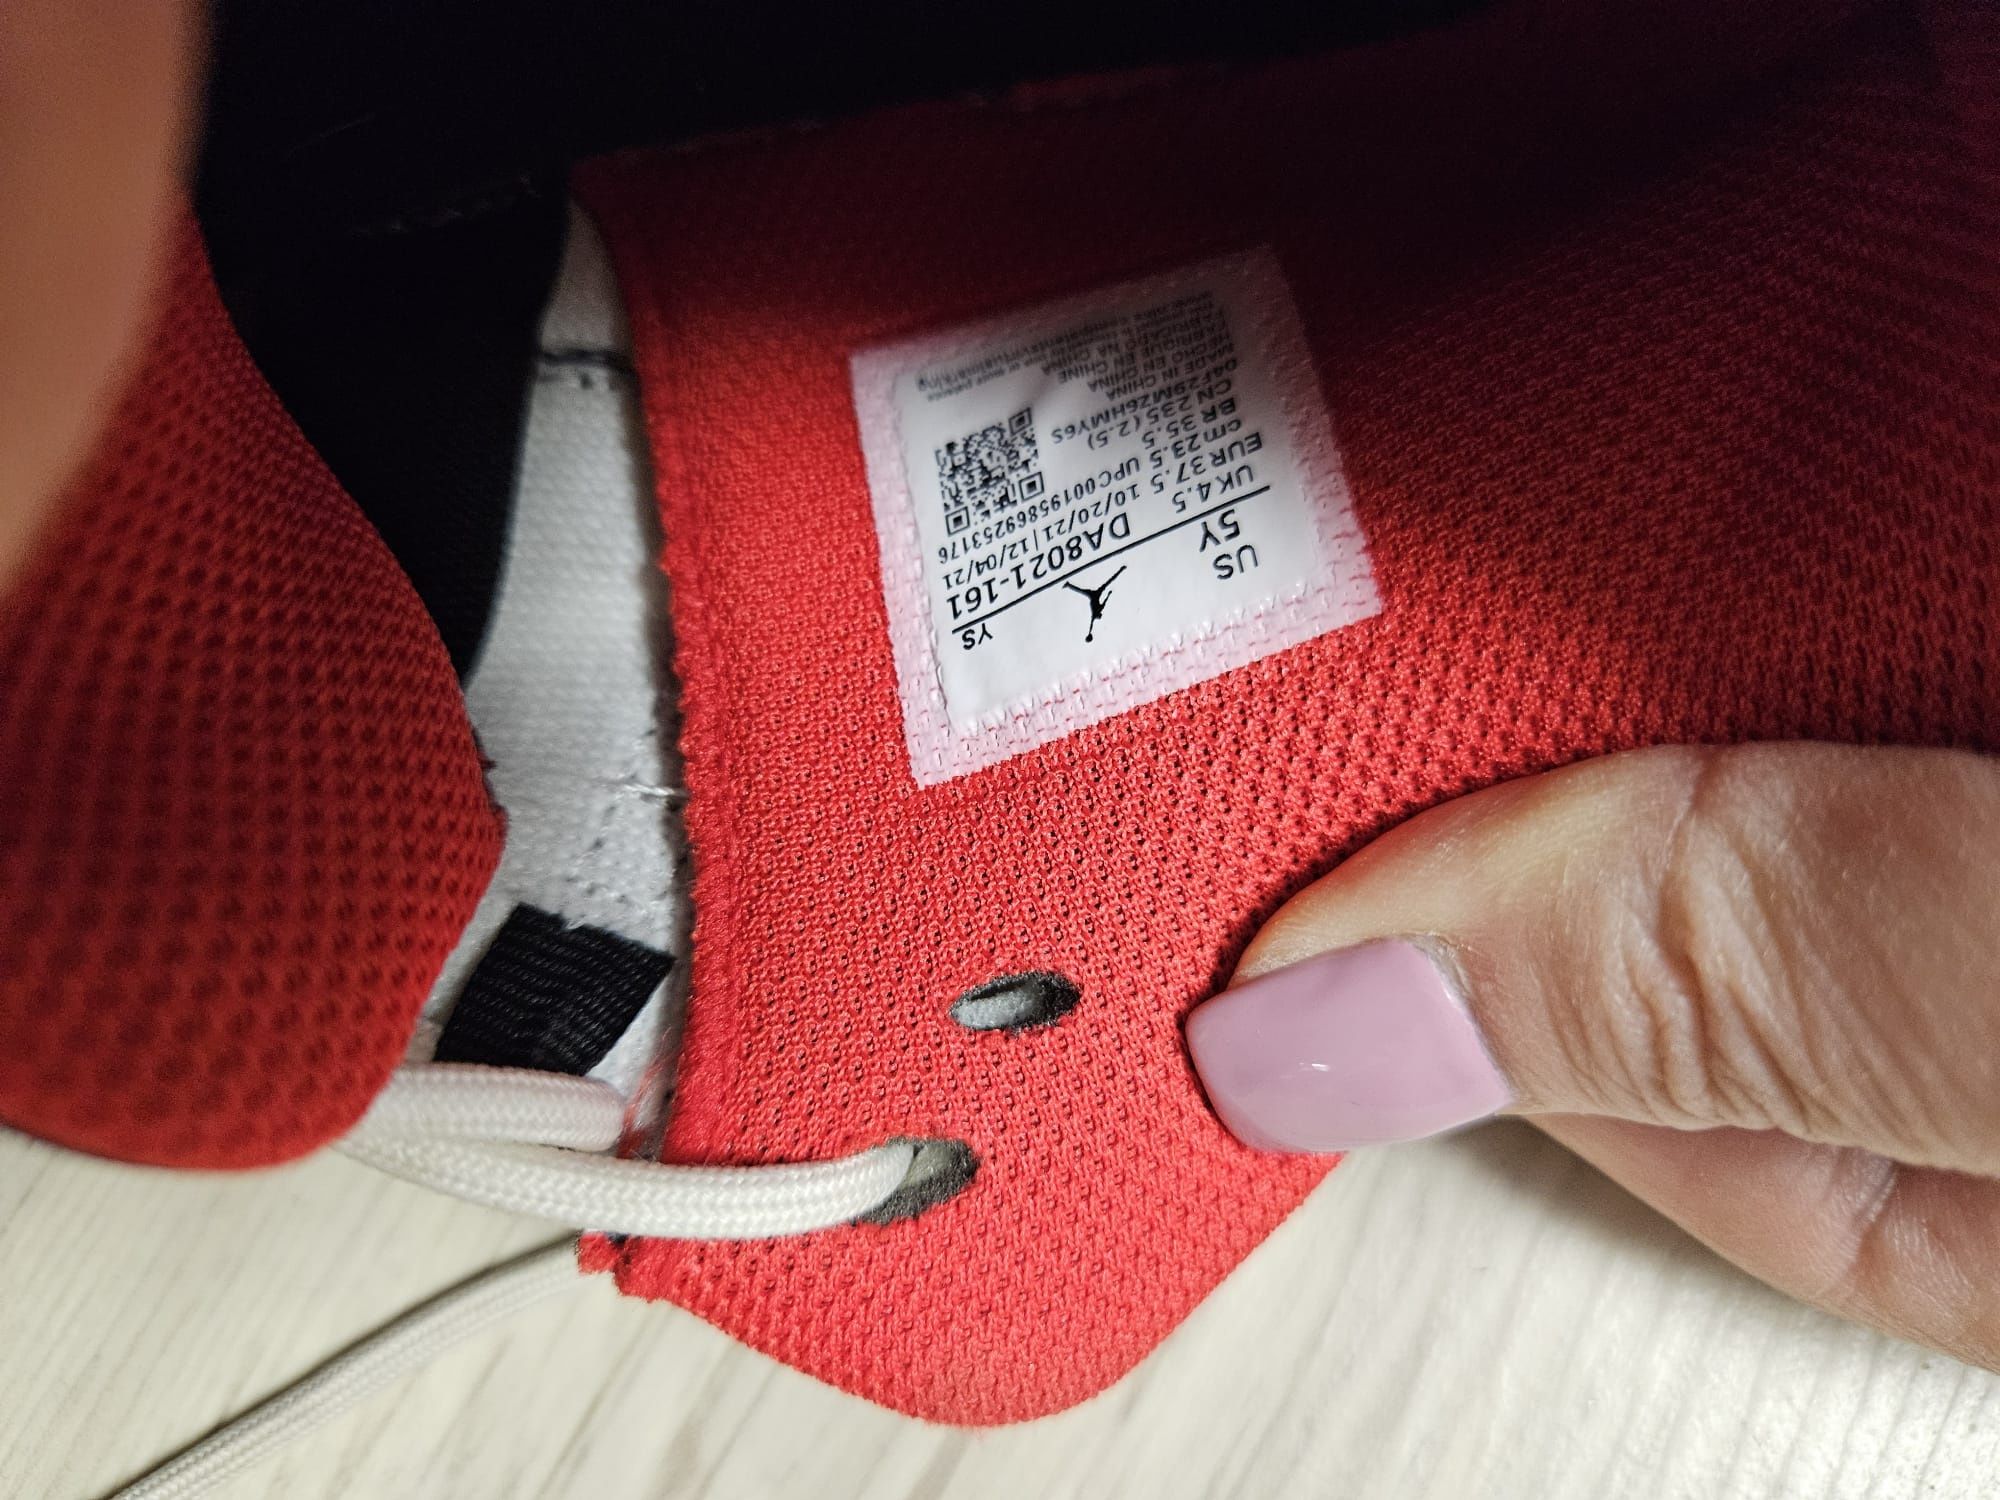 Adidasi Nike Jordan 23 pt copii măsura 37.5